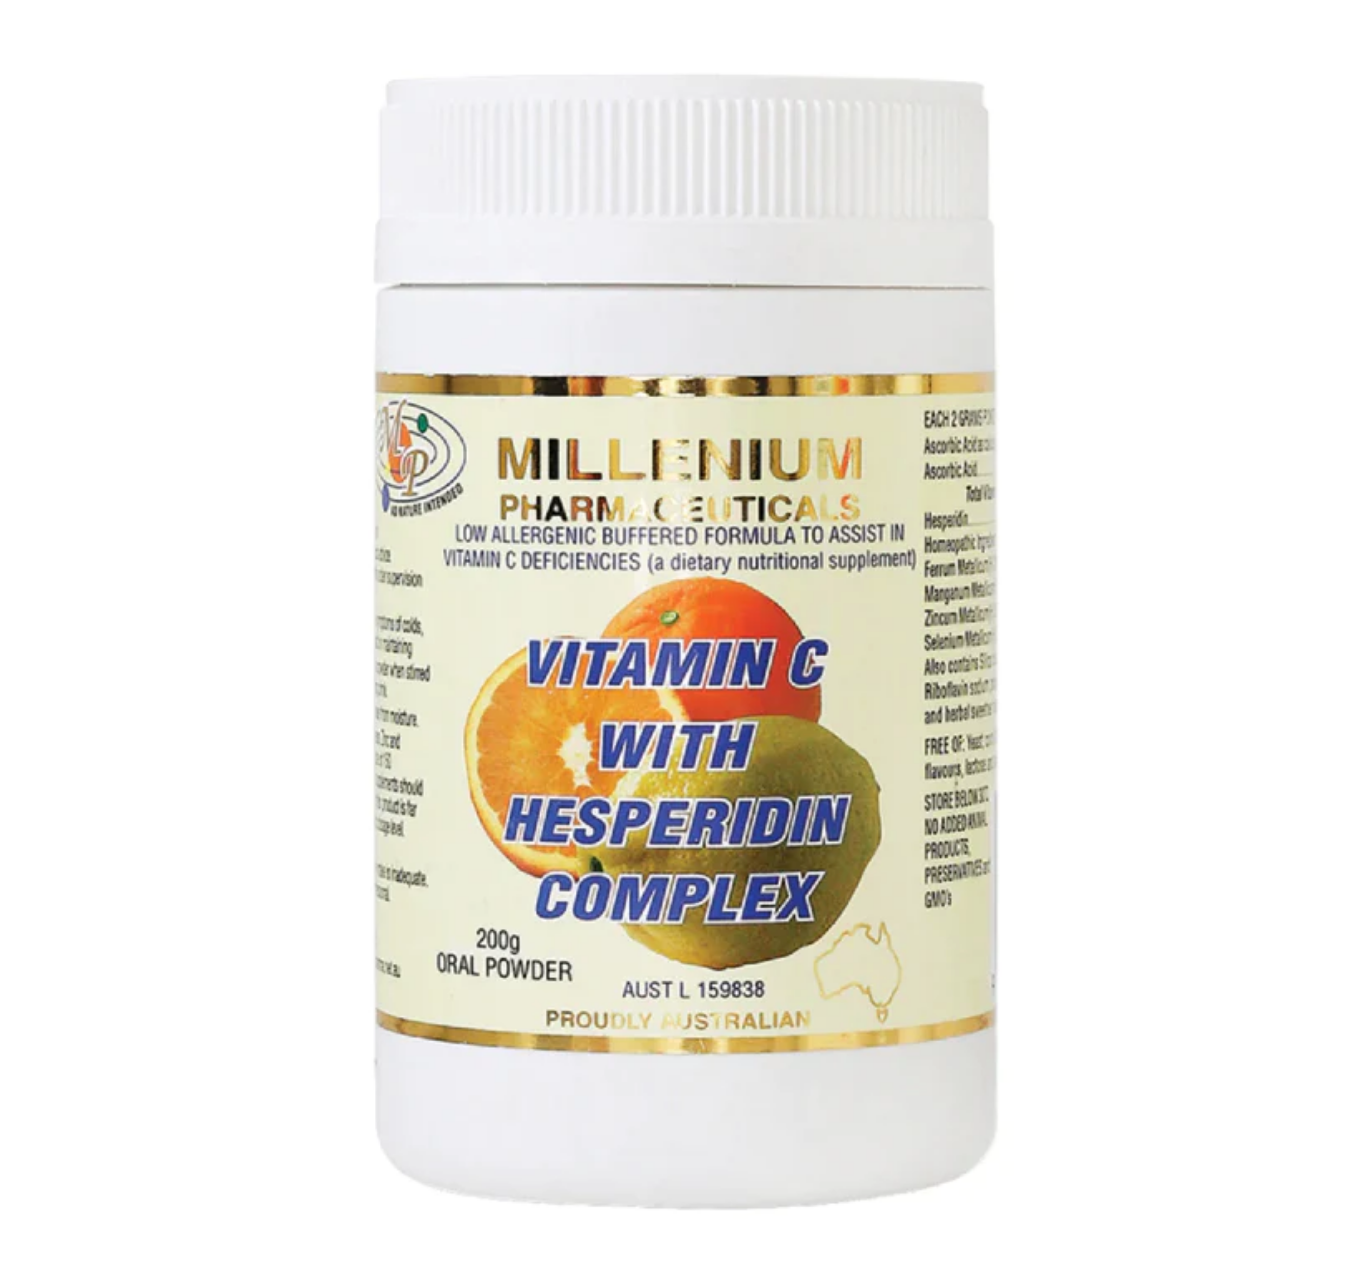 Vitamin C with Hesperidin Complex